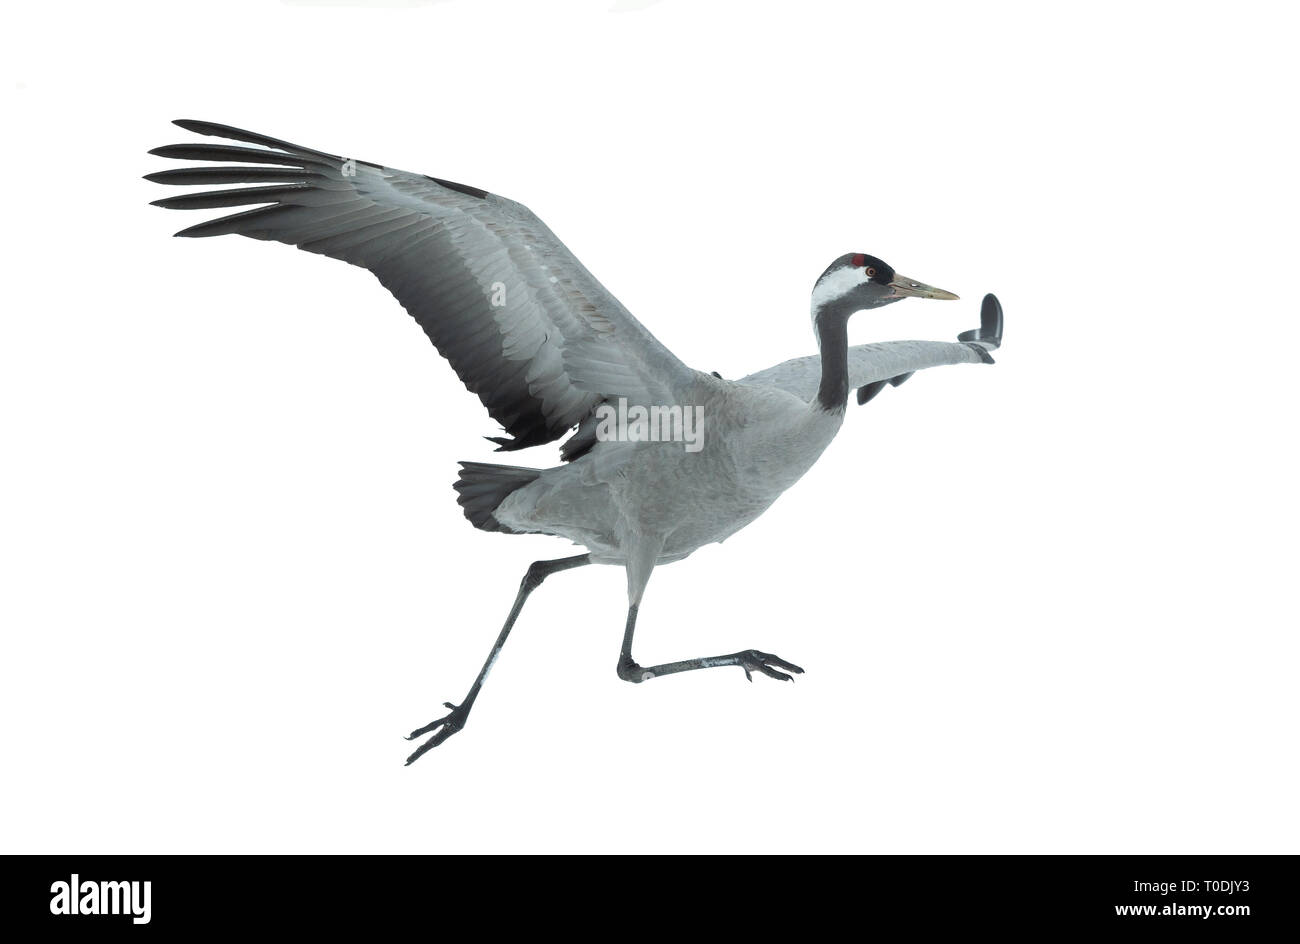 Eurasian crane. Isolated on white background.  Scientific name: Grus grus, Grus communis.  Eurasian or common crane. Stock Photo